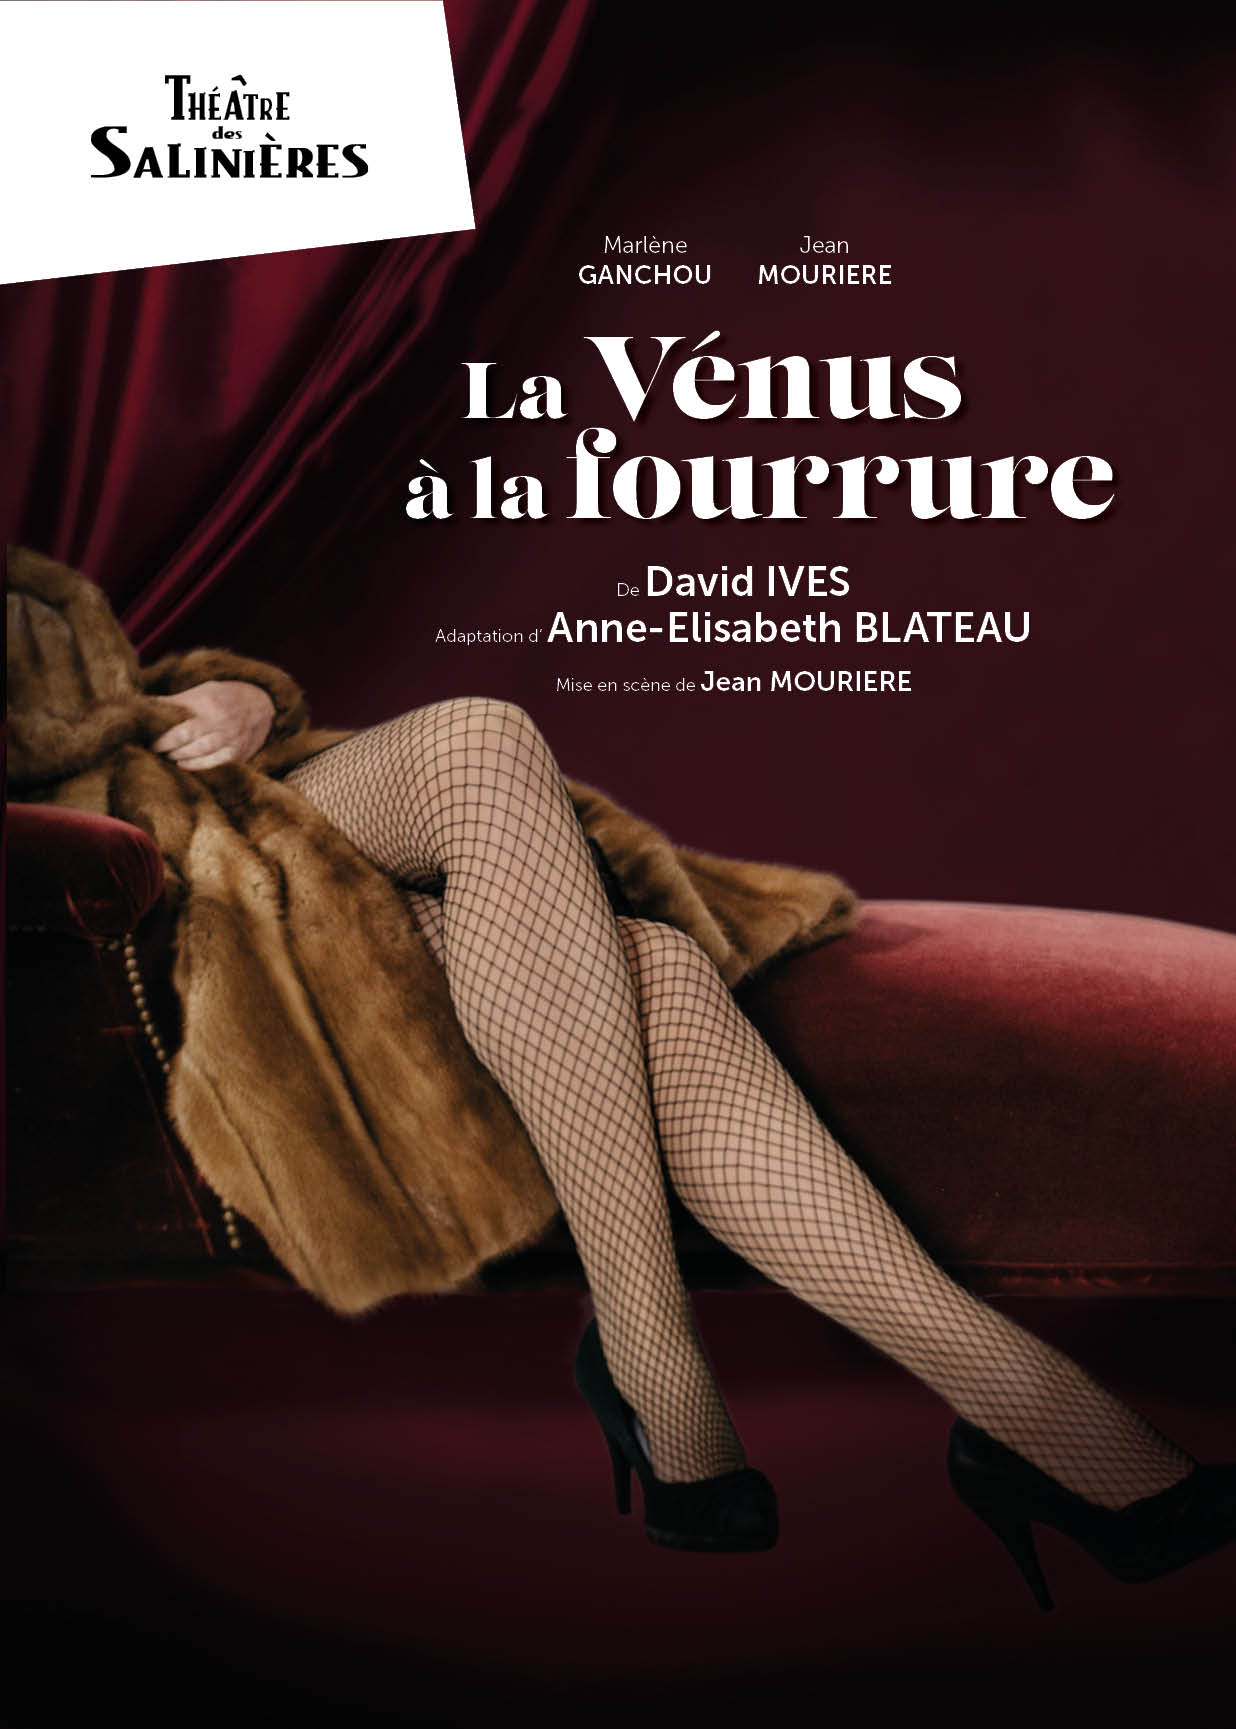 https://the-place-to-be.fr/wp-content/uploads/2020/09/venus-fourrure-theatre-salinieres-bordeaux-2020.jpg